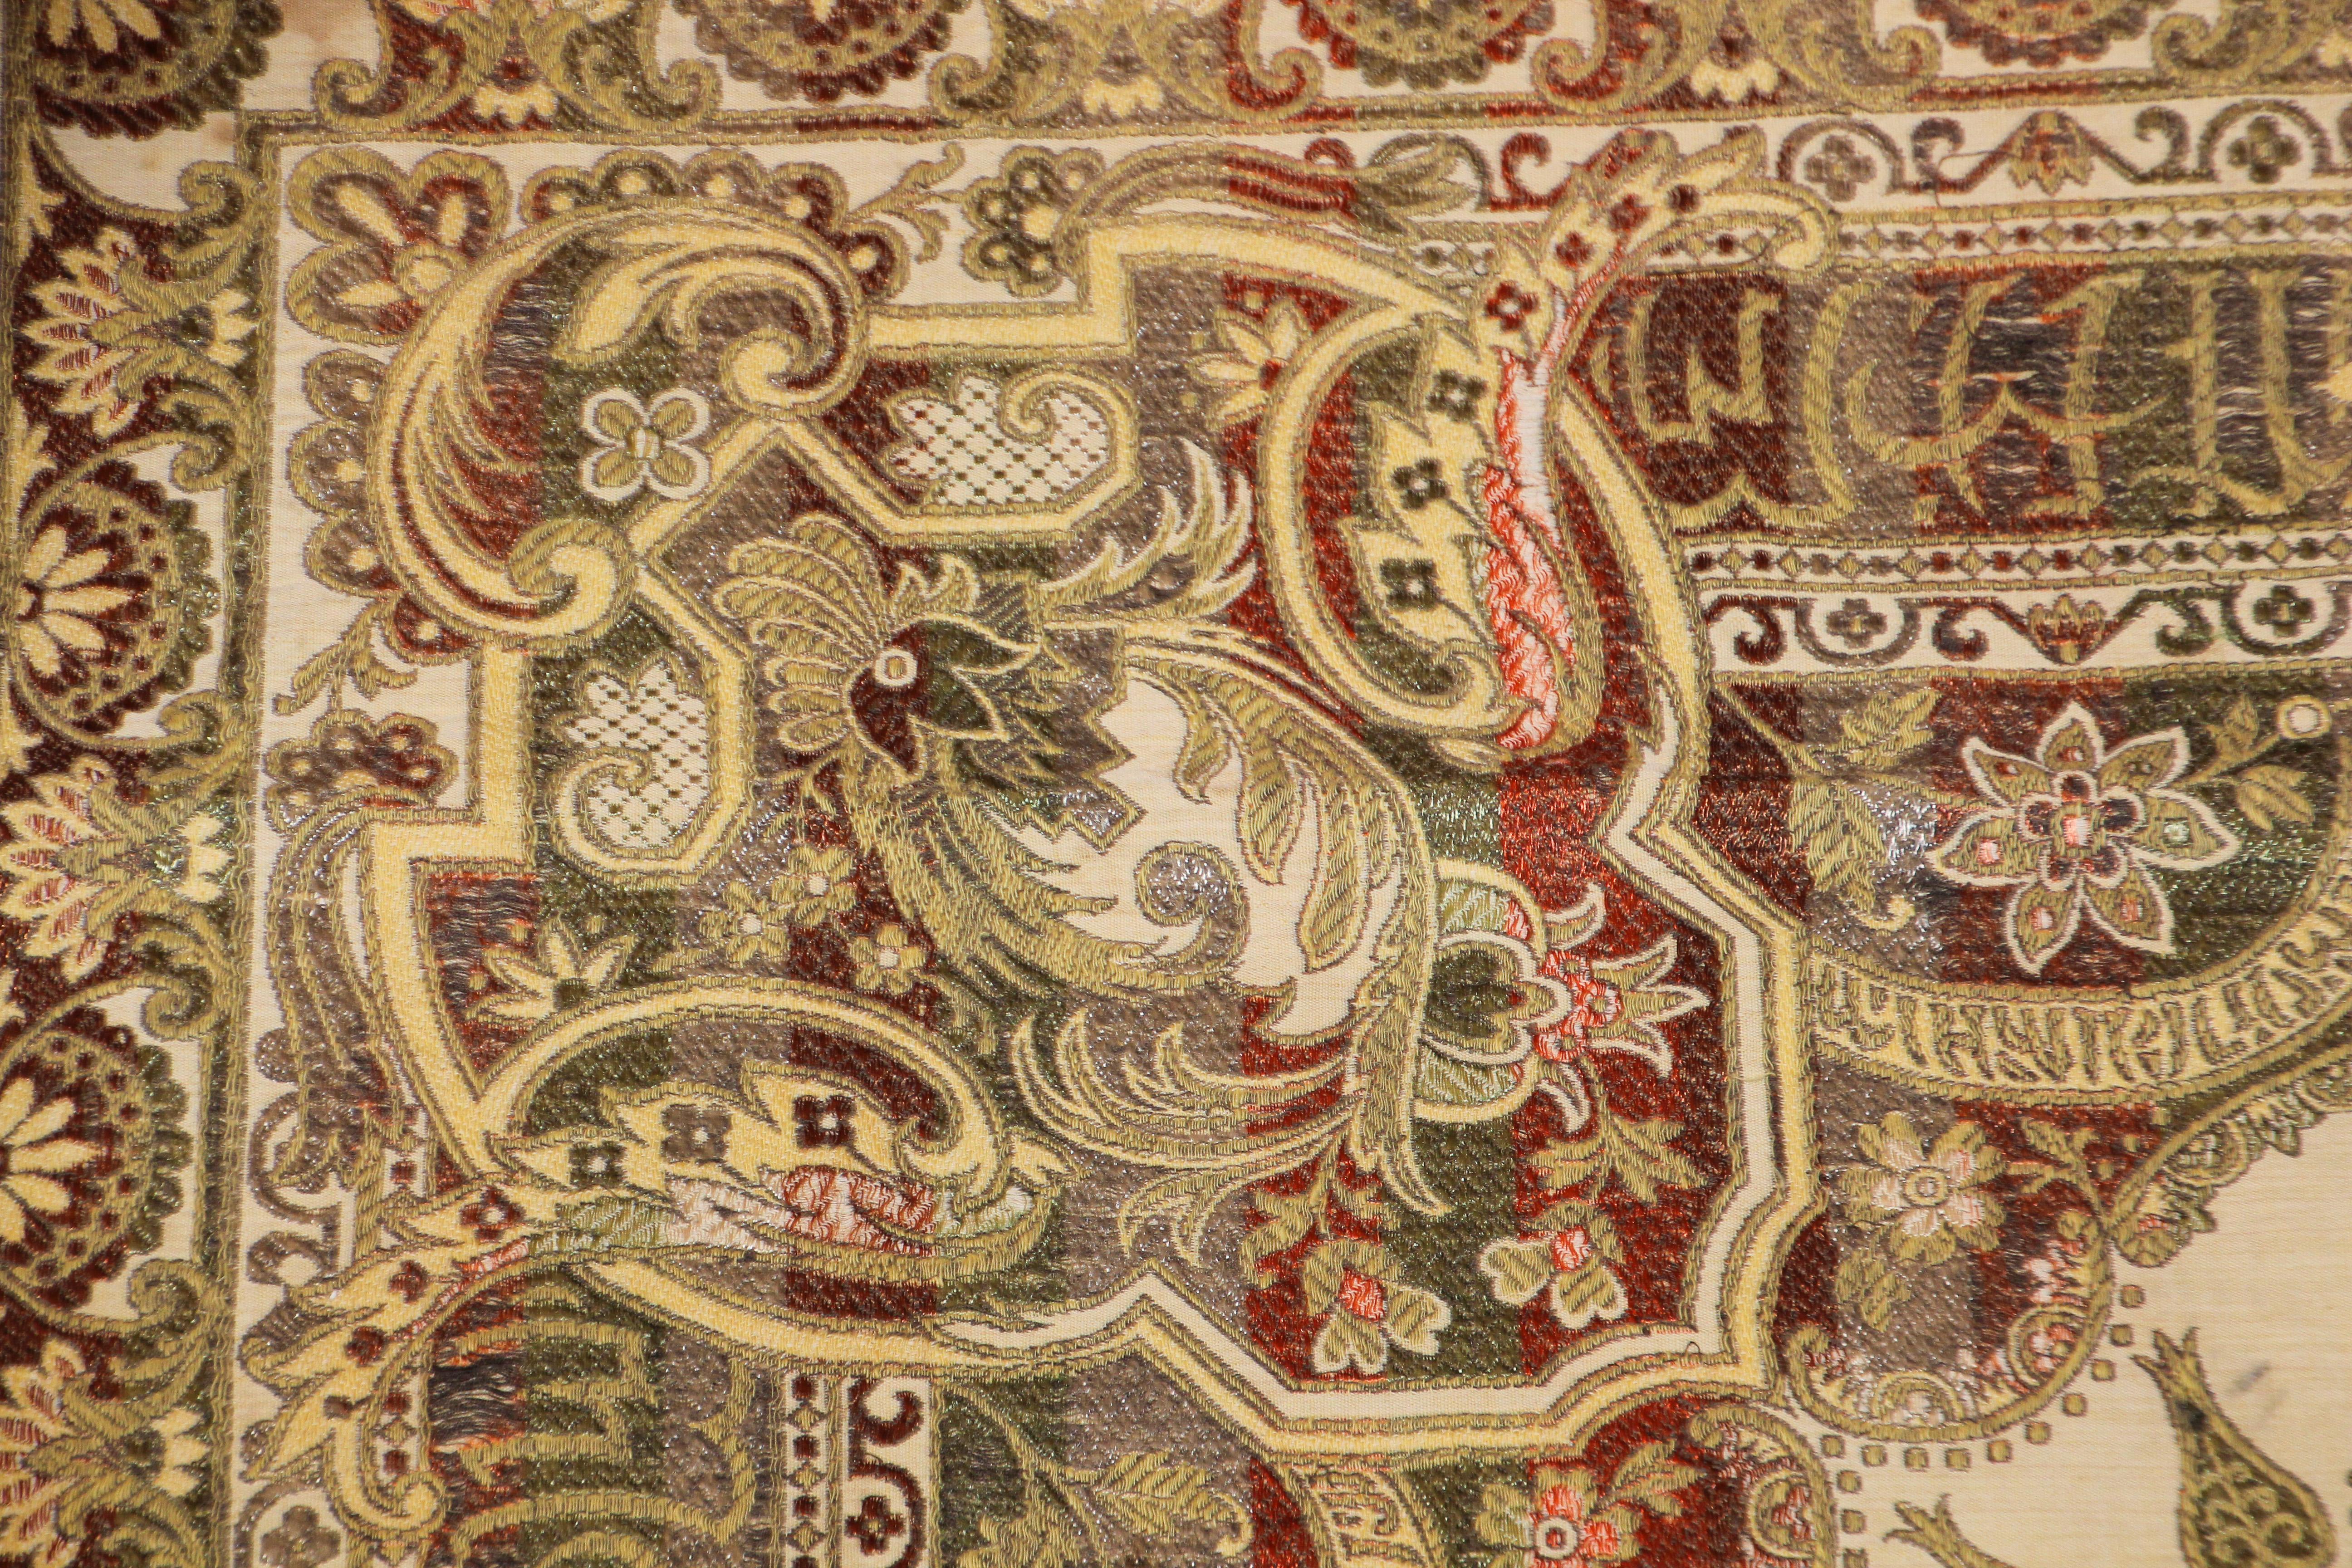 20th Century Antique Granada Moorish Textile with Arabic Calligraphy Writing